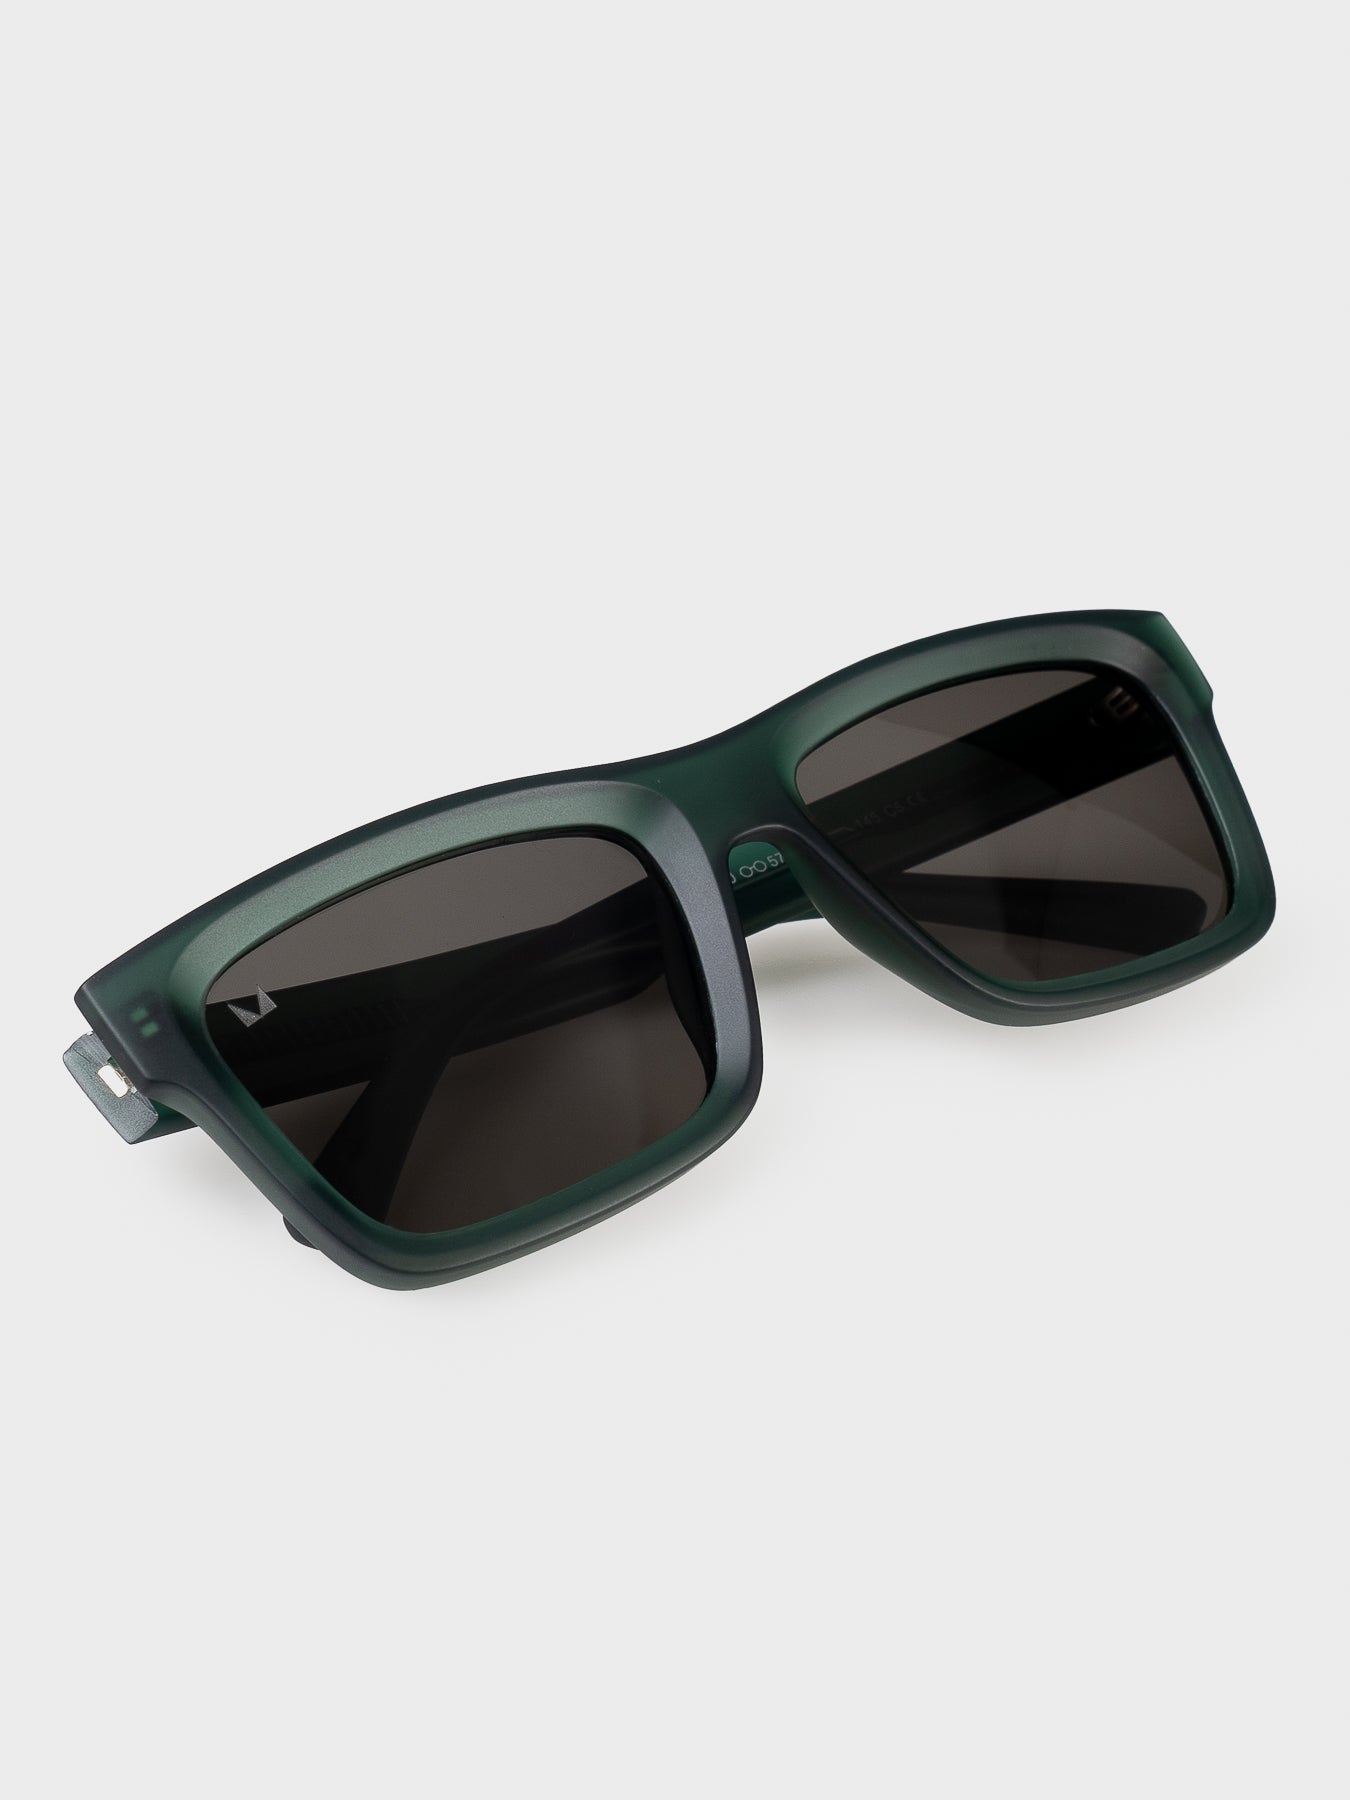 Óculos de Sol MVCK Troia Verde Polarizado